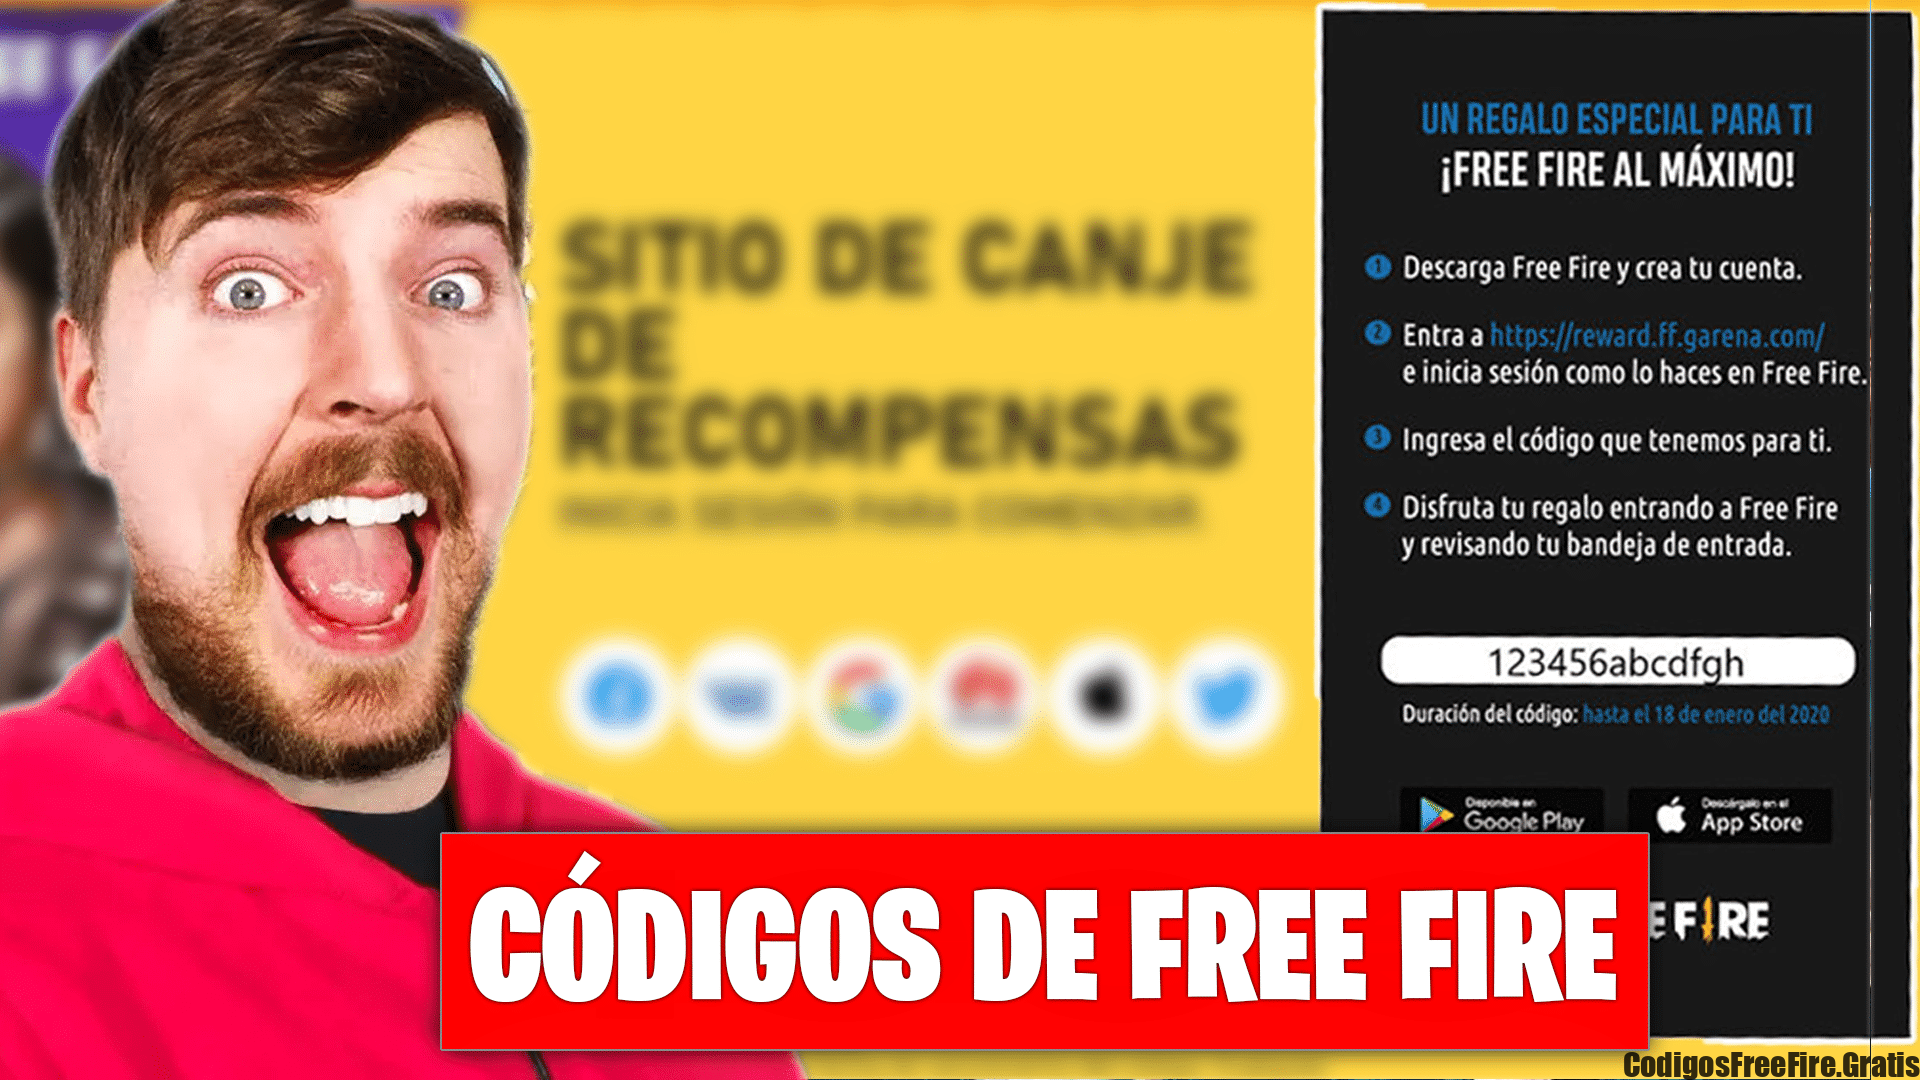 (c) Codigosfreefire.gratis